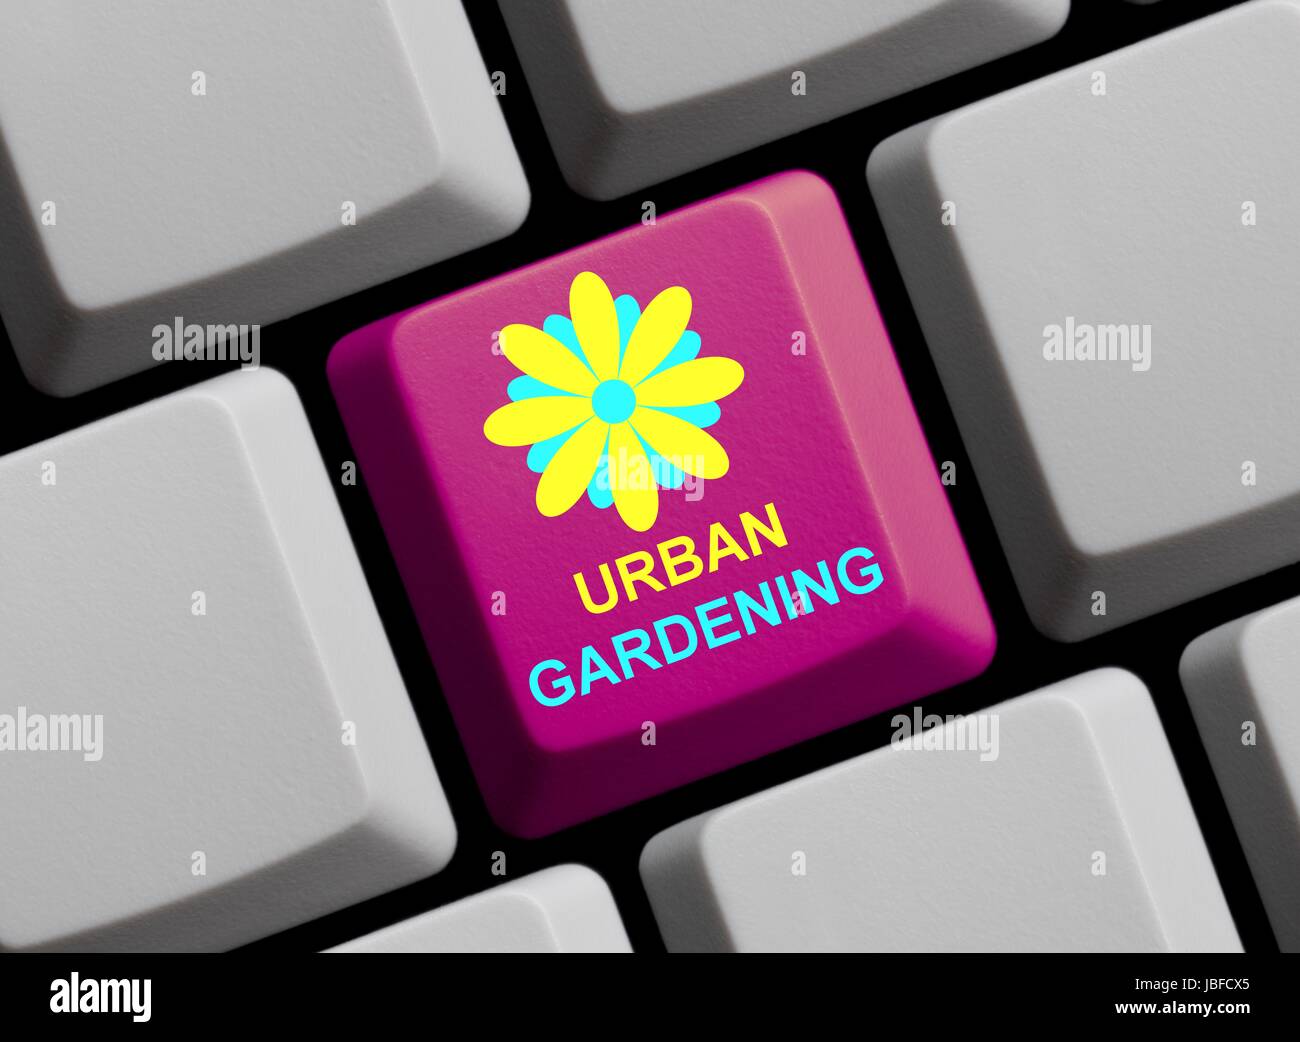 urban gardening online Stock Photo